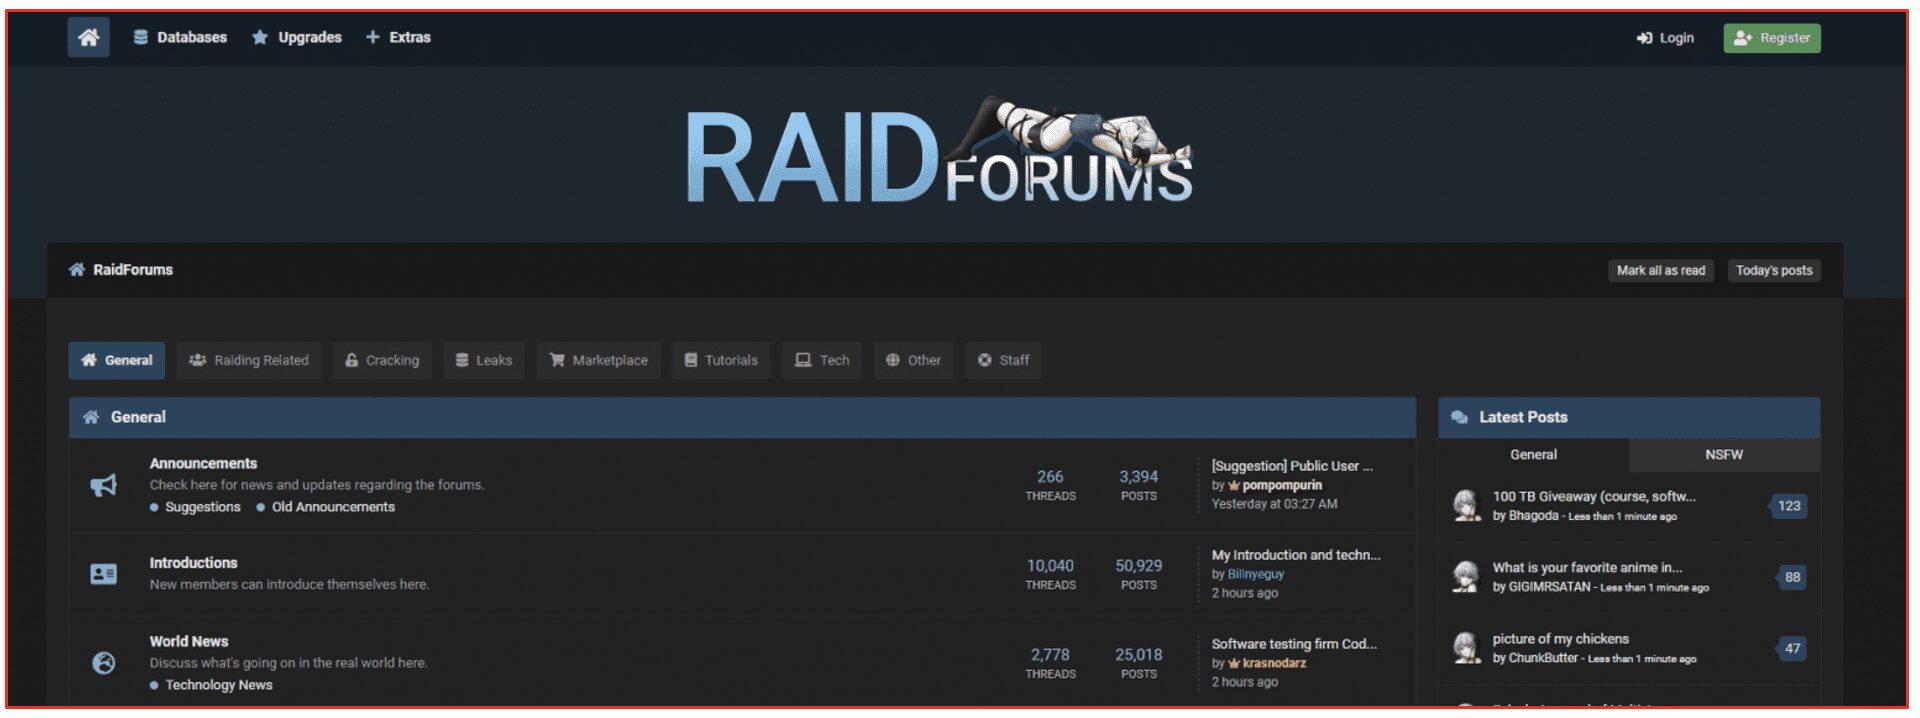 RaidForums Landing Page before the RaidForums Seizure